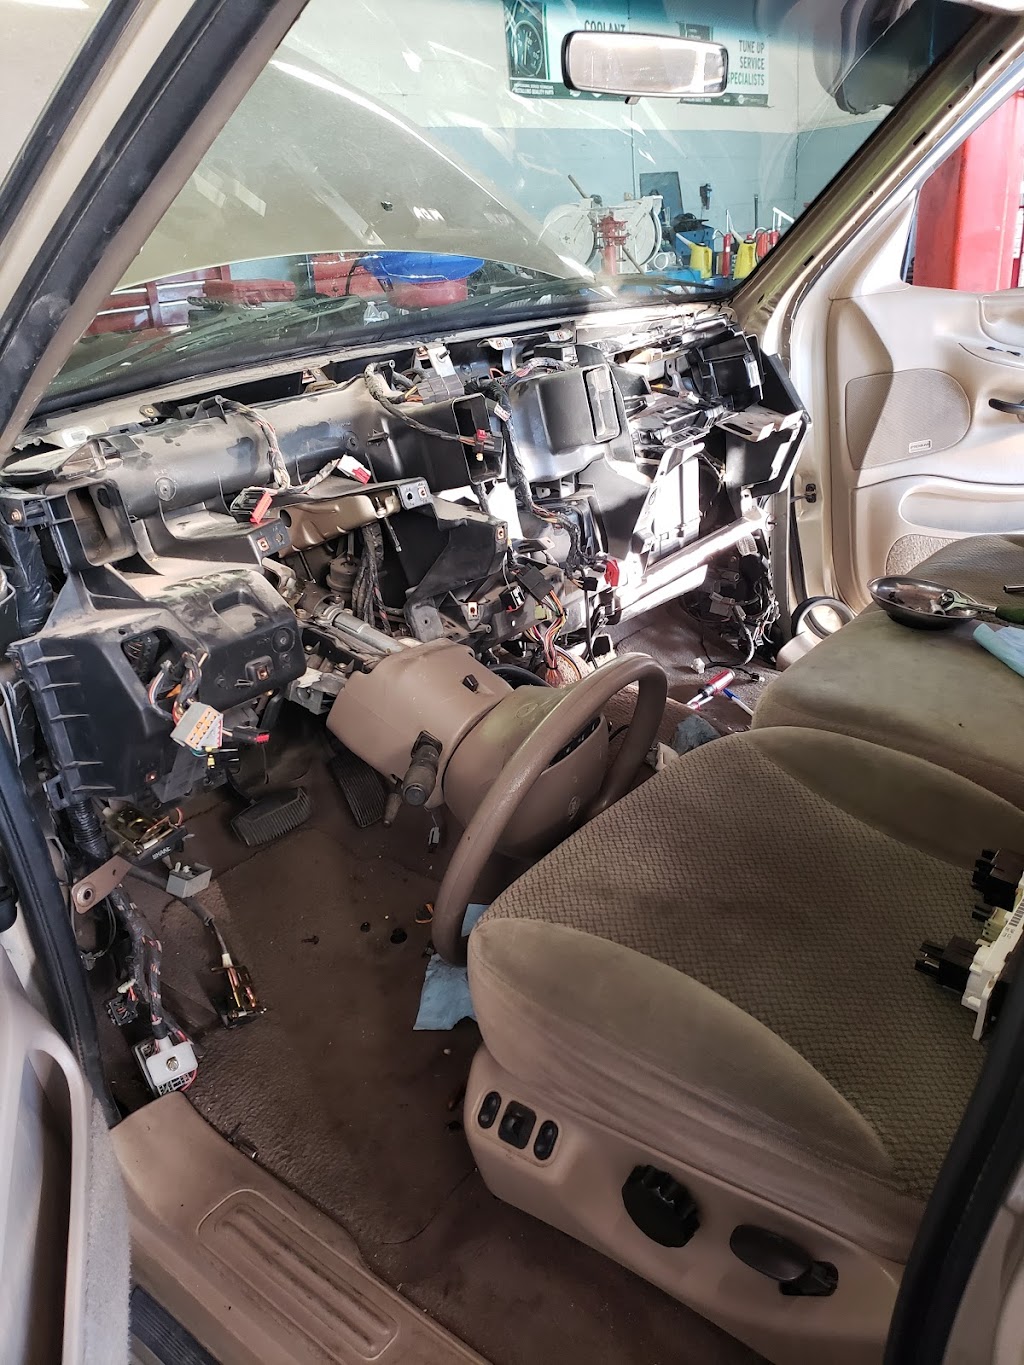 Duff Brown Complete Auto Repair & Towing | 8824 N Black Cyn Hwy ste #2, Phoenix, AZ 85051, USA | Phone: (602) 366-9121